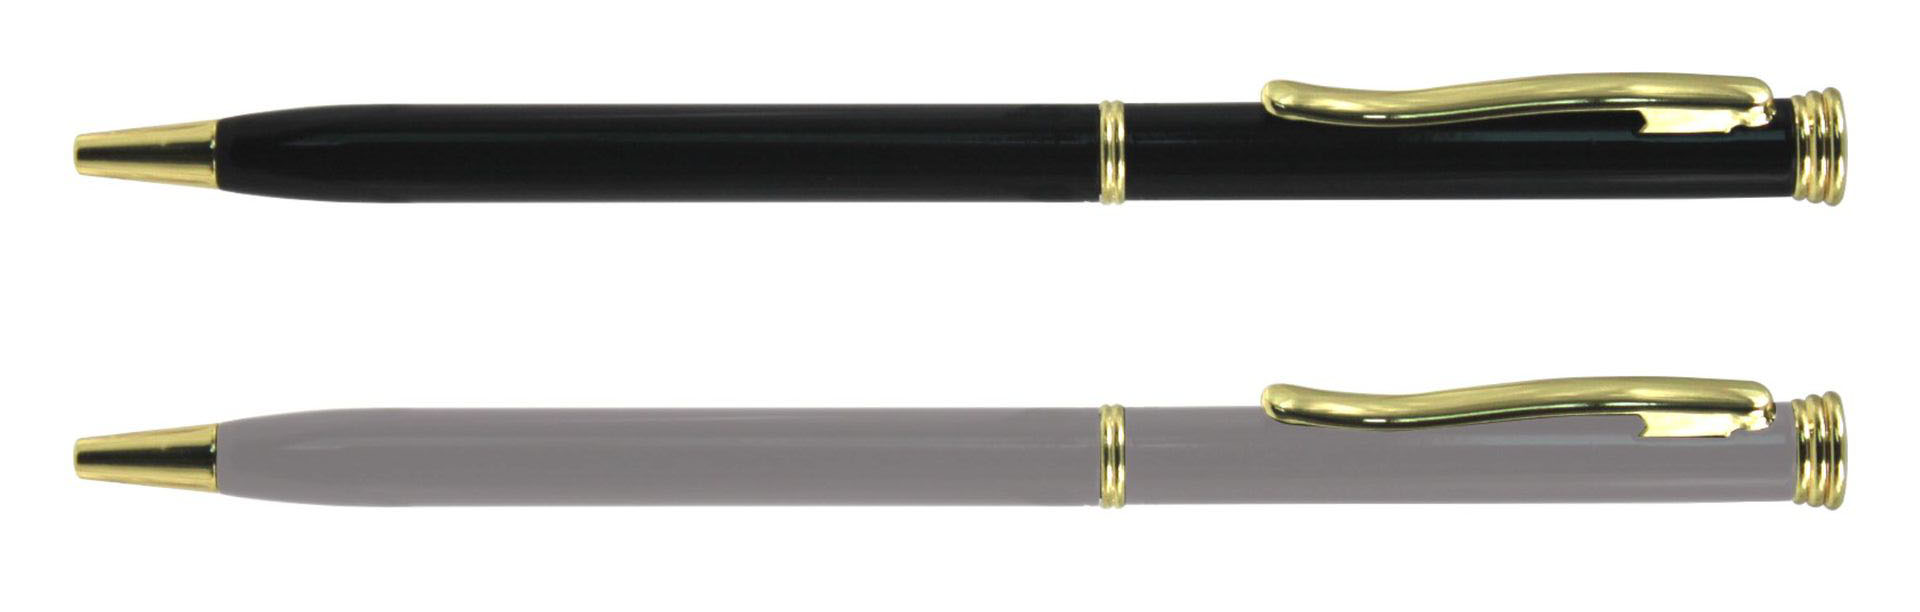 slim printed personalized metal ballpoint pen